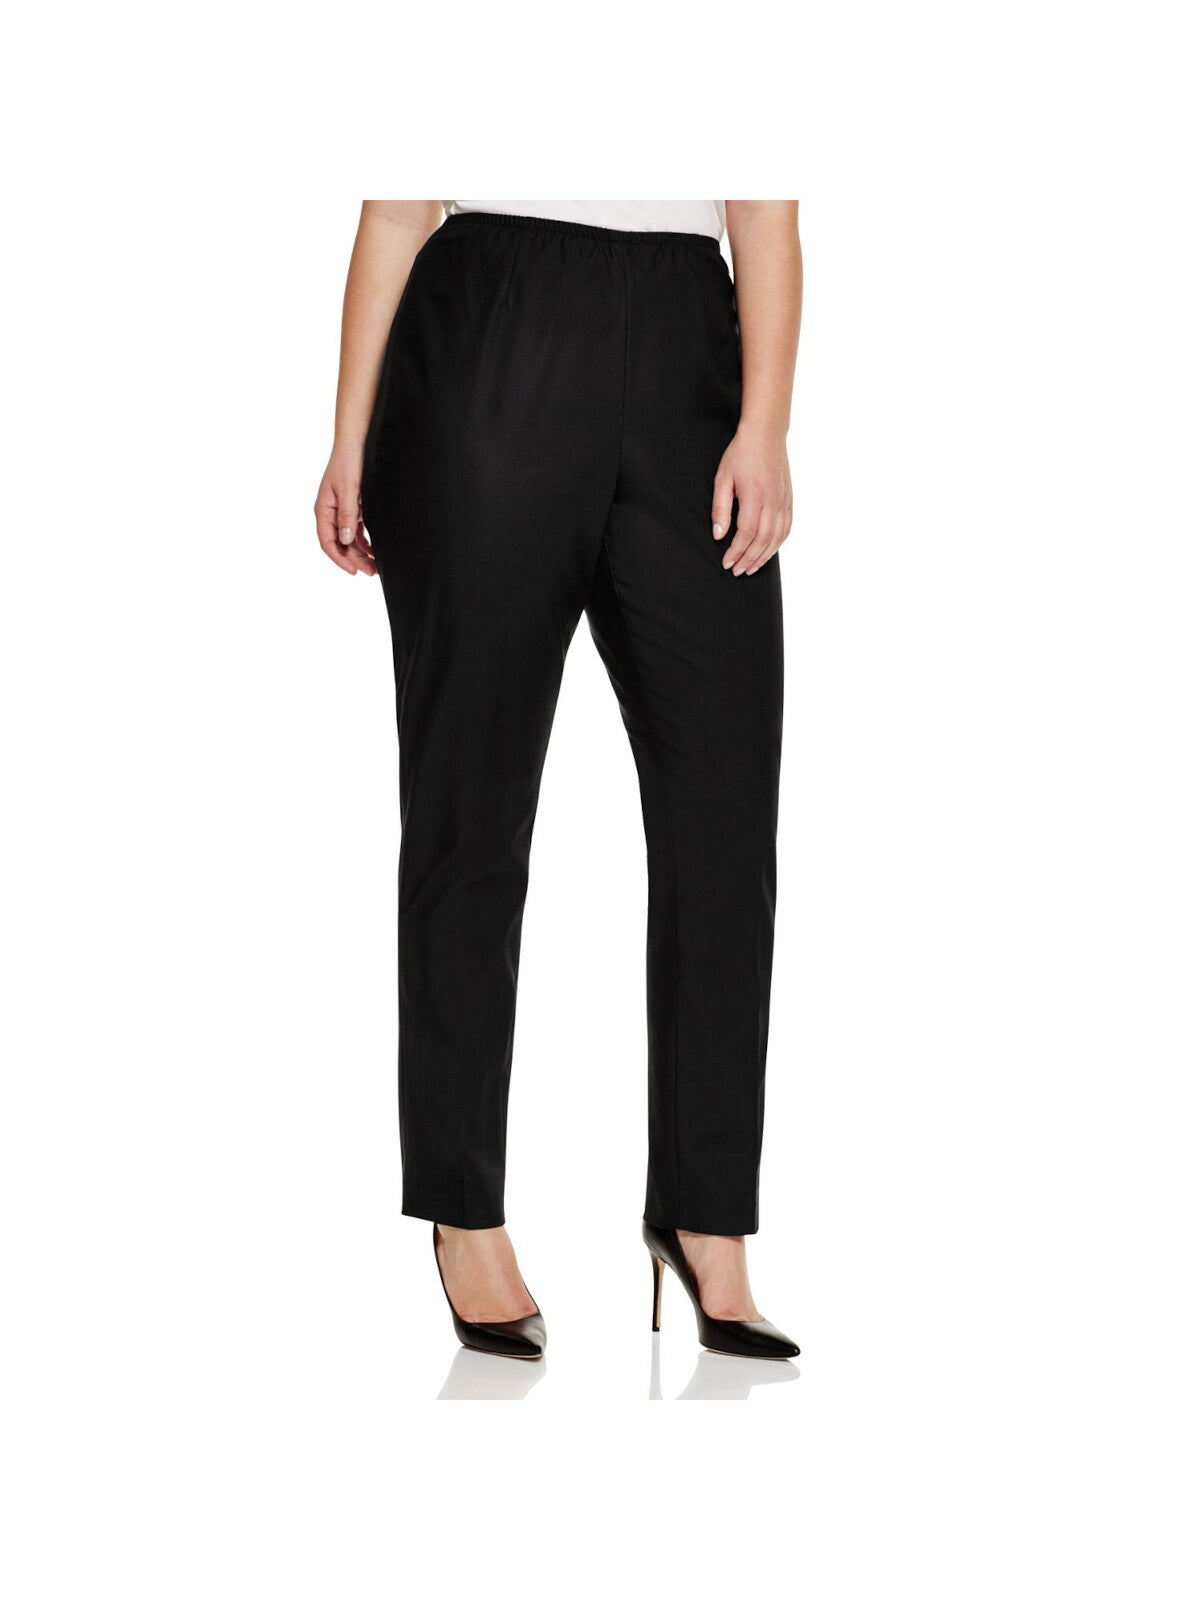 NIC+ZOE Womens Black Stretch Zippered Tapered Leg Wear To Work Pants Plus 14W